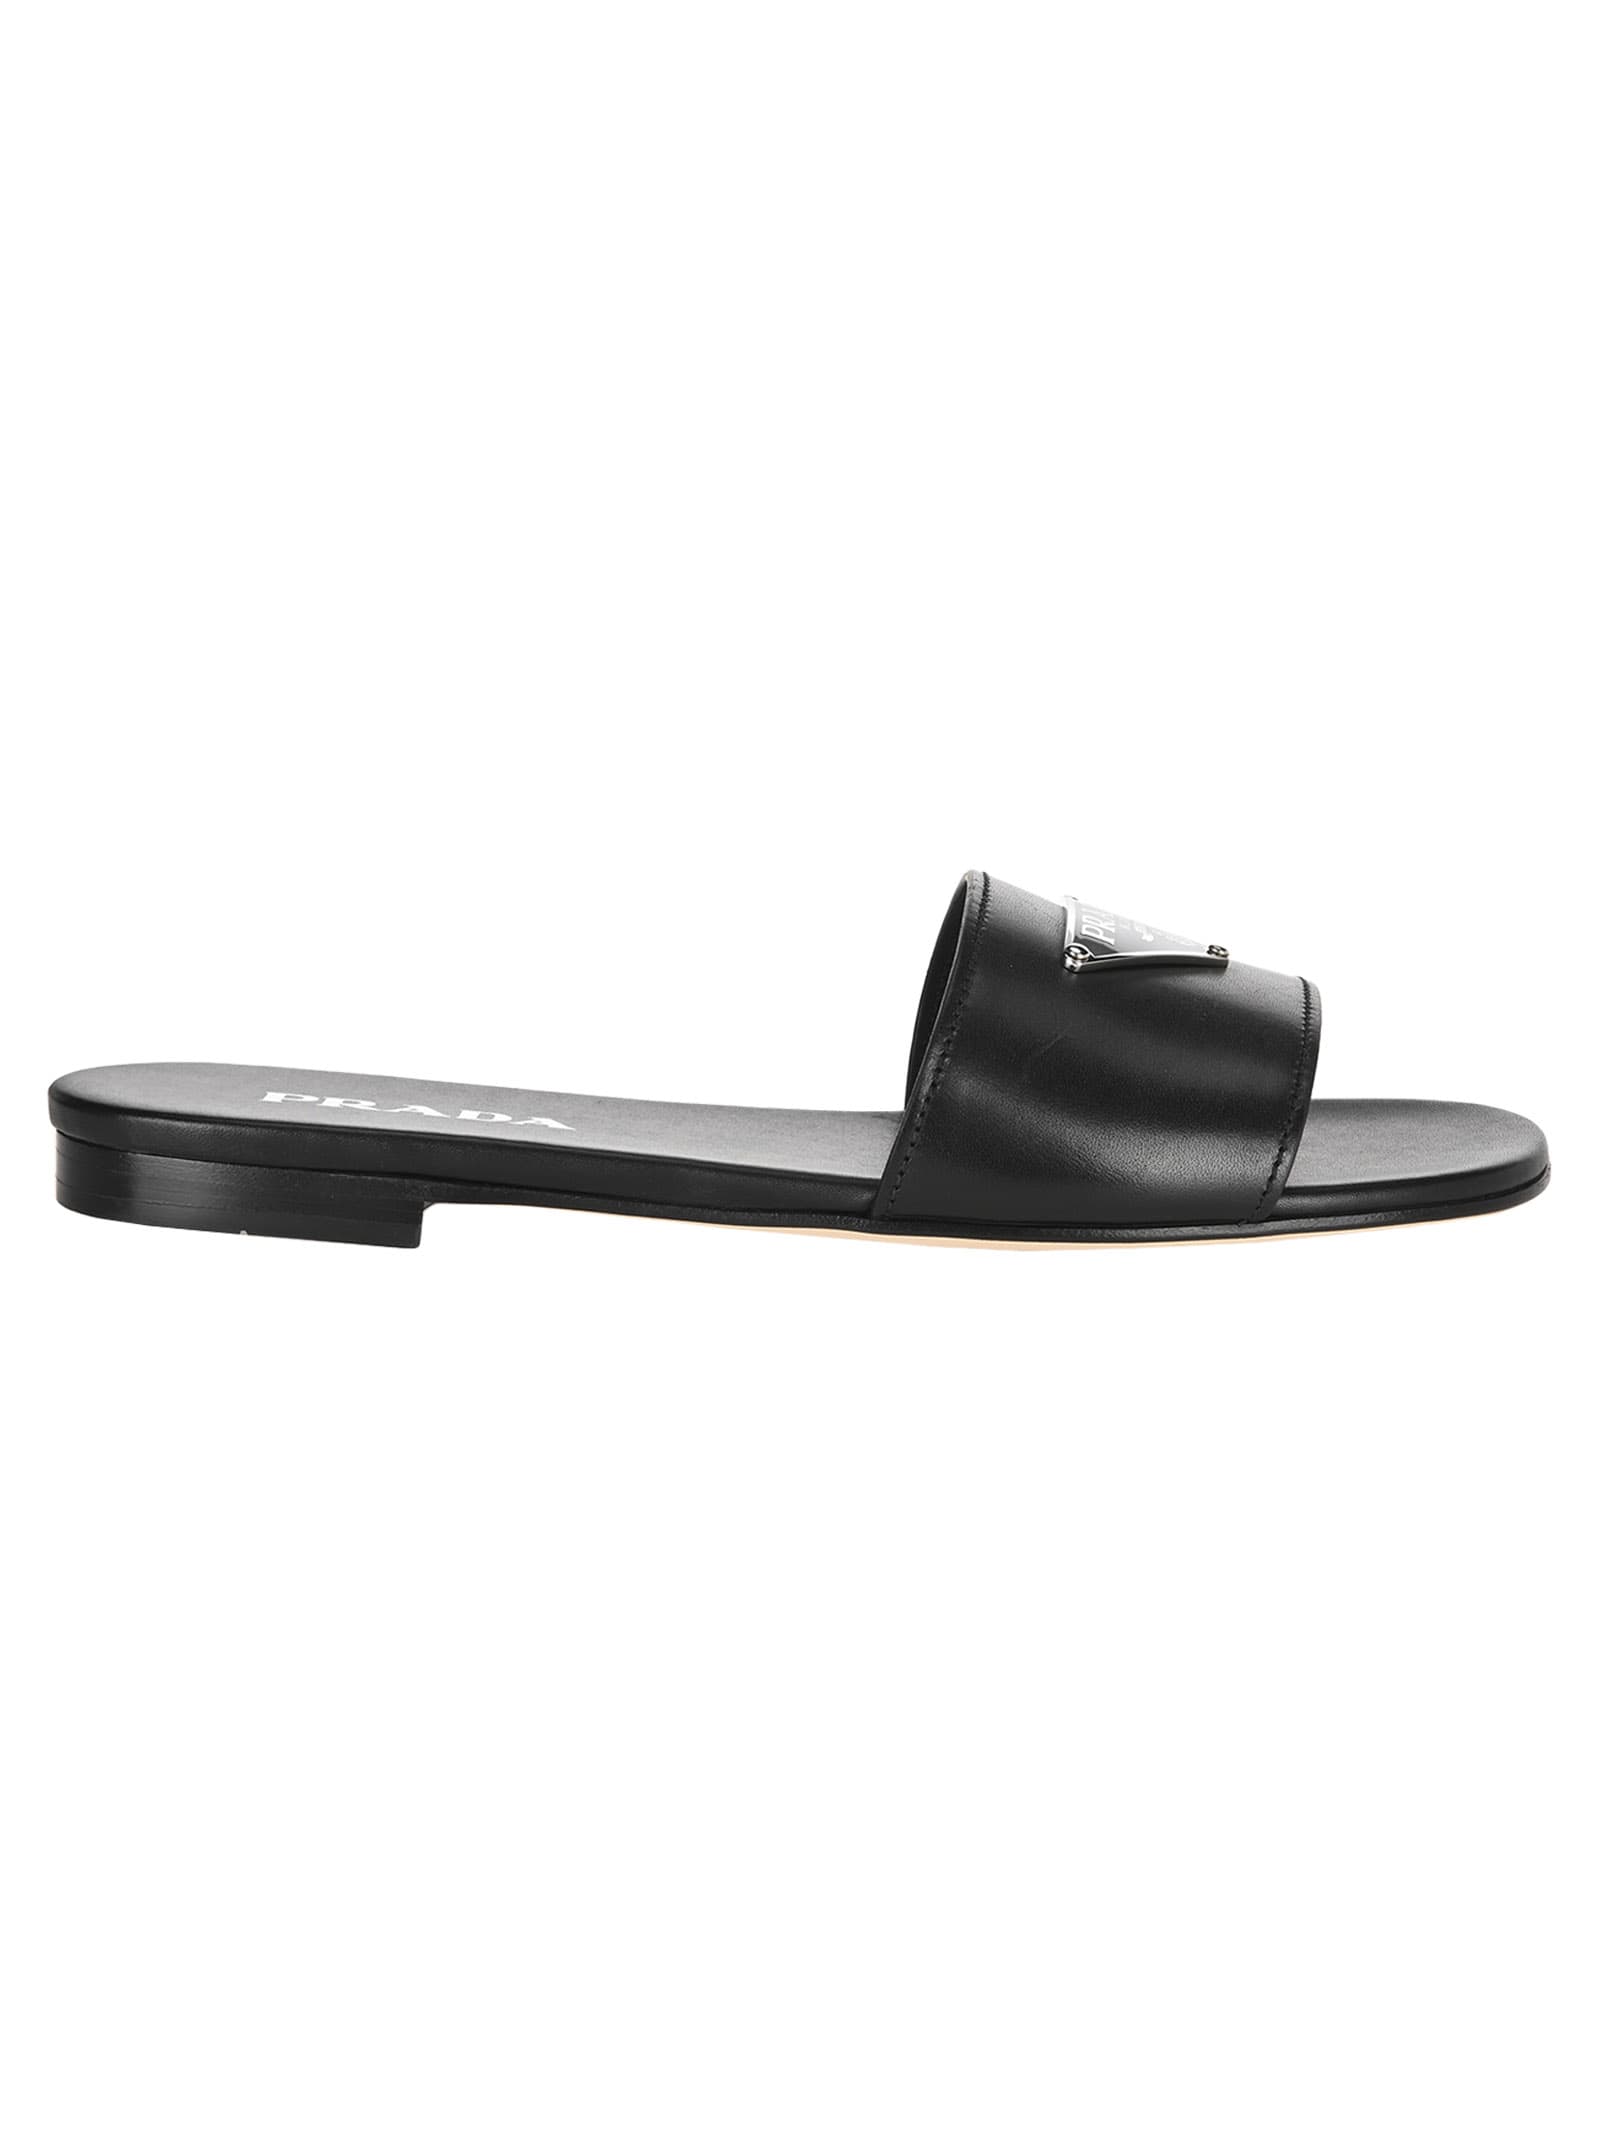 Details more than 67 prada flat sandals latest - dedaotaonec